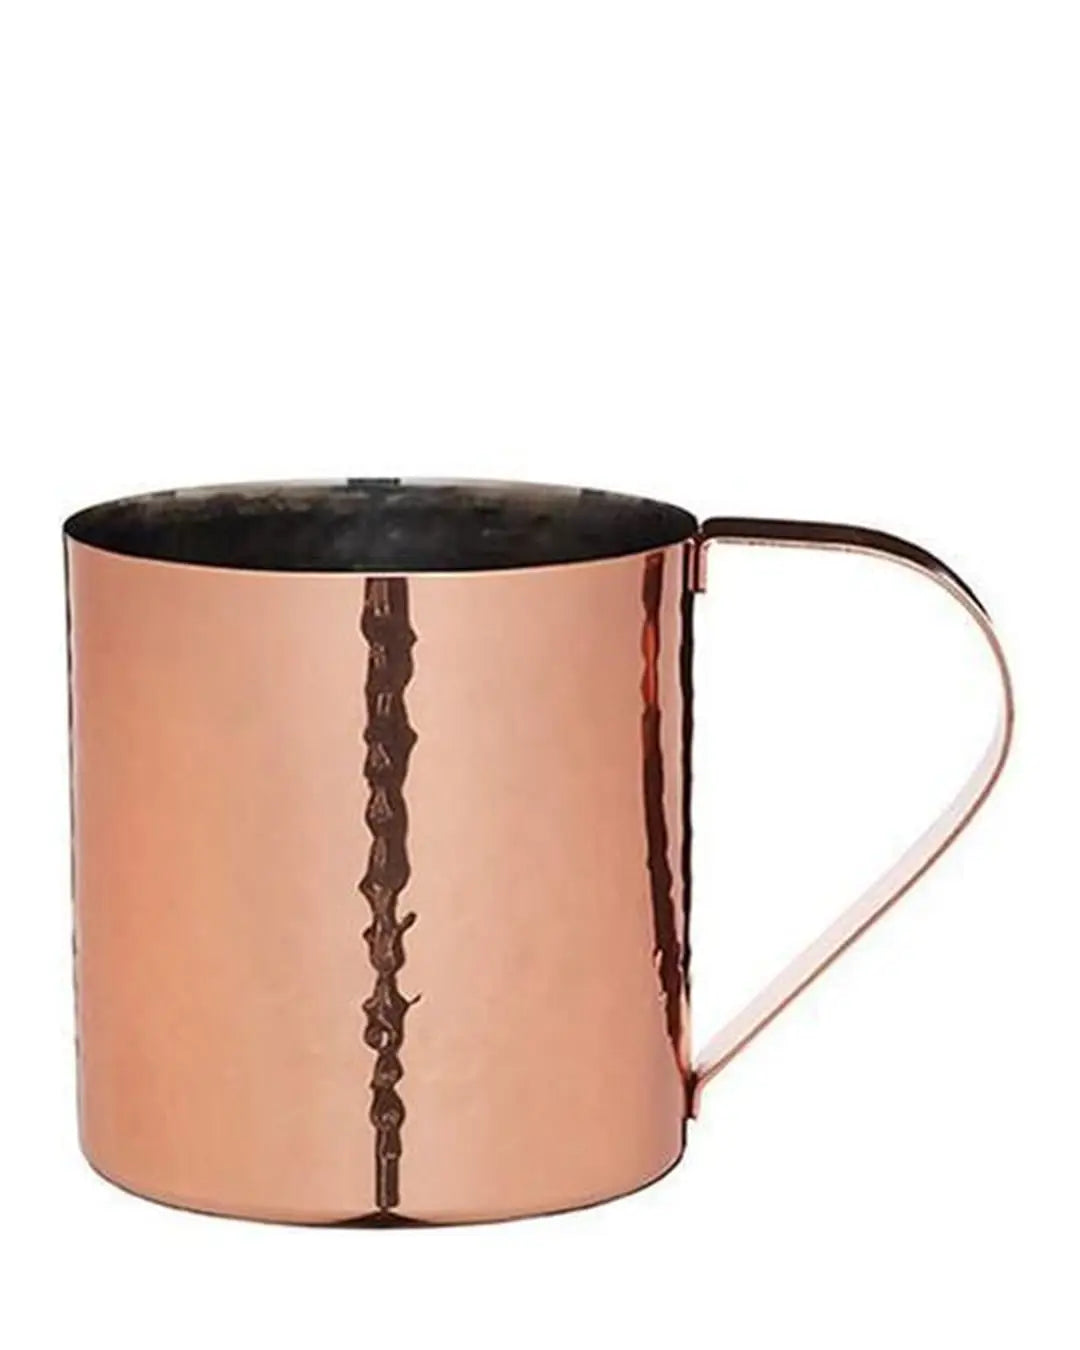 BarCraft Hammered Copper Finish Moscow Mule Mug Tableware